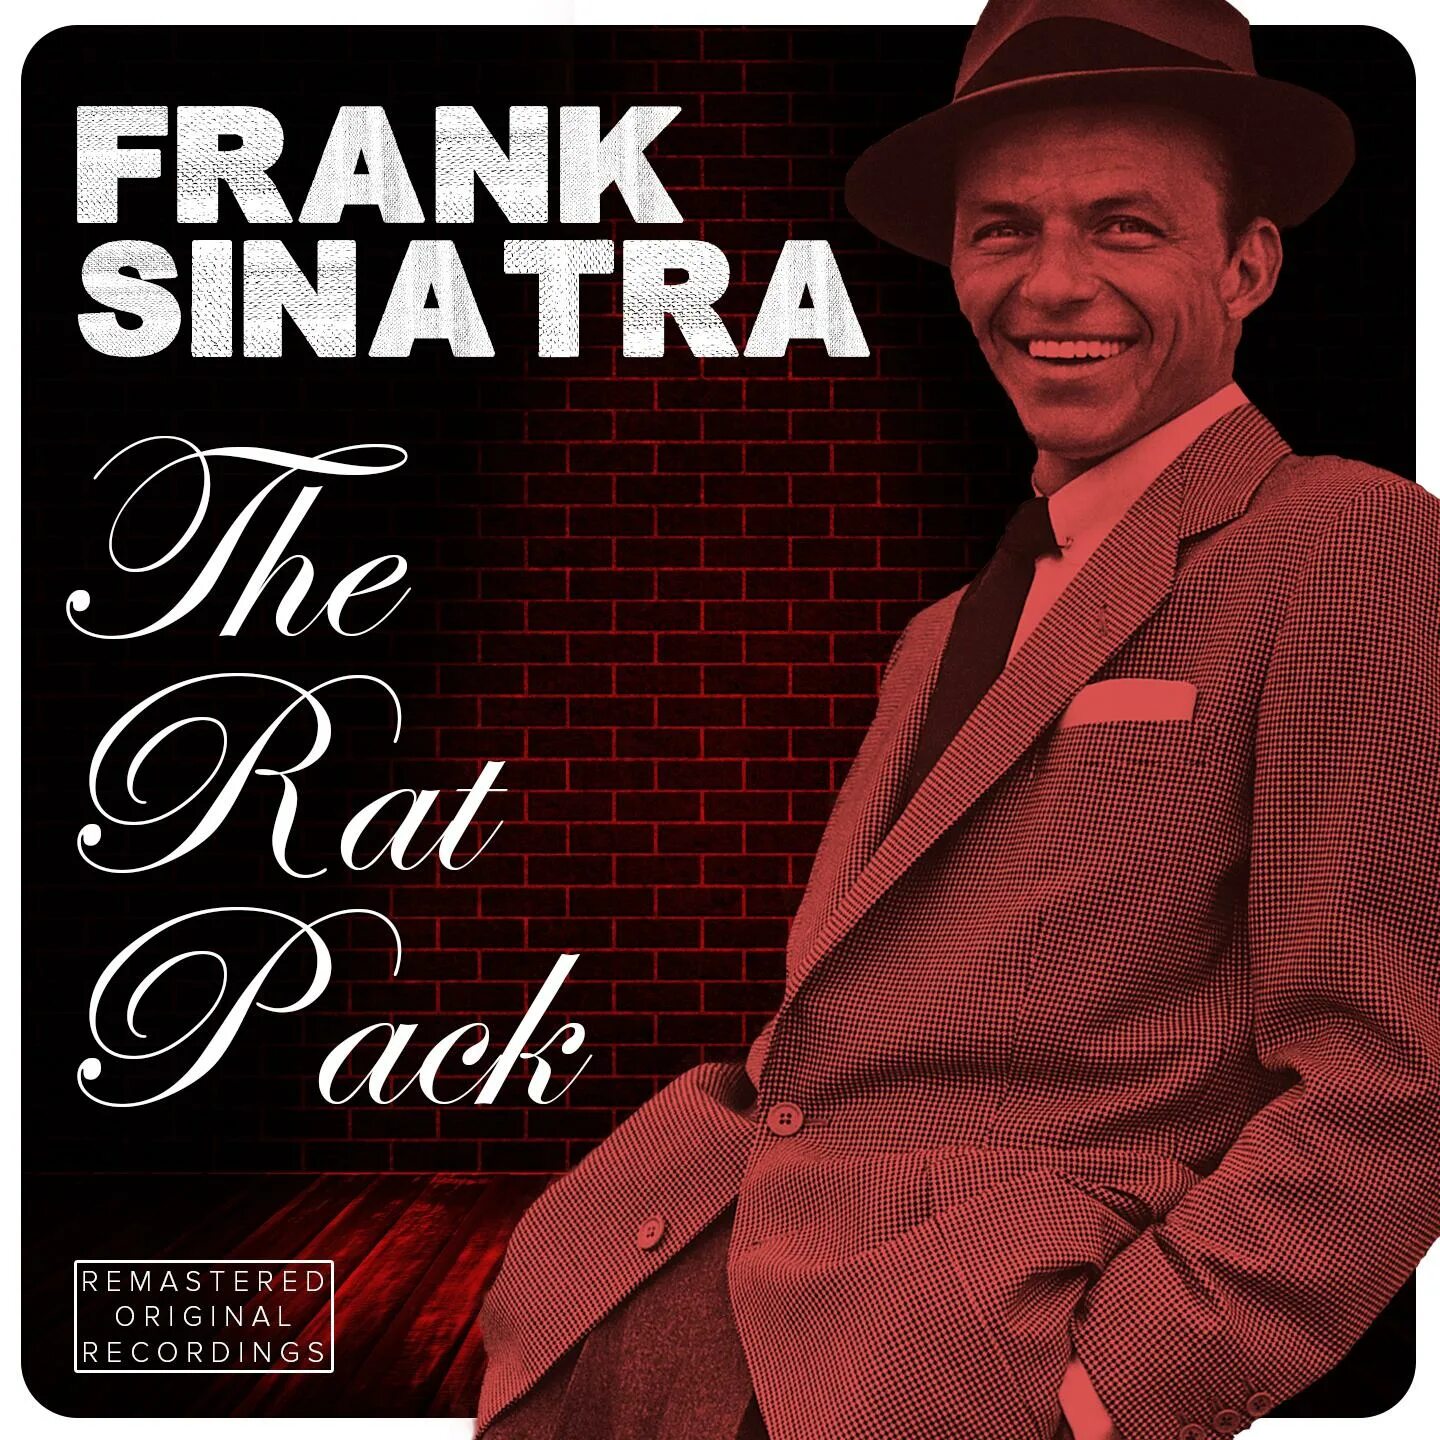 Фрэнк синатра хиты. Frank Sinatra album. Фрэнк Синатра альбомы. Jerome Sinatra. Frank Sinatra album Cover.